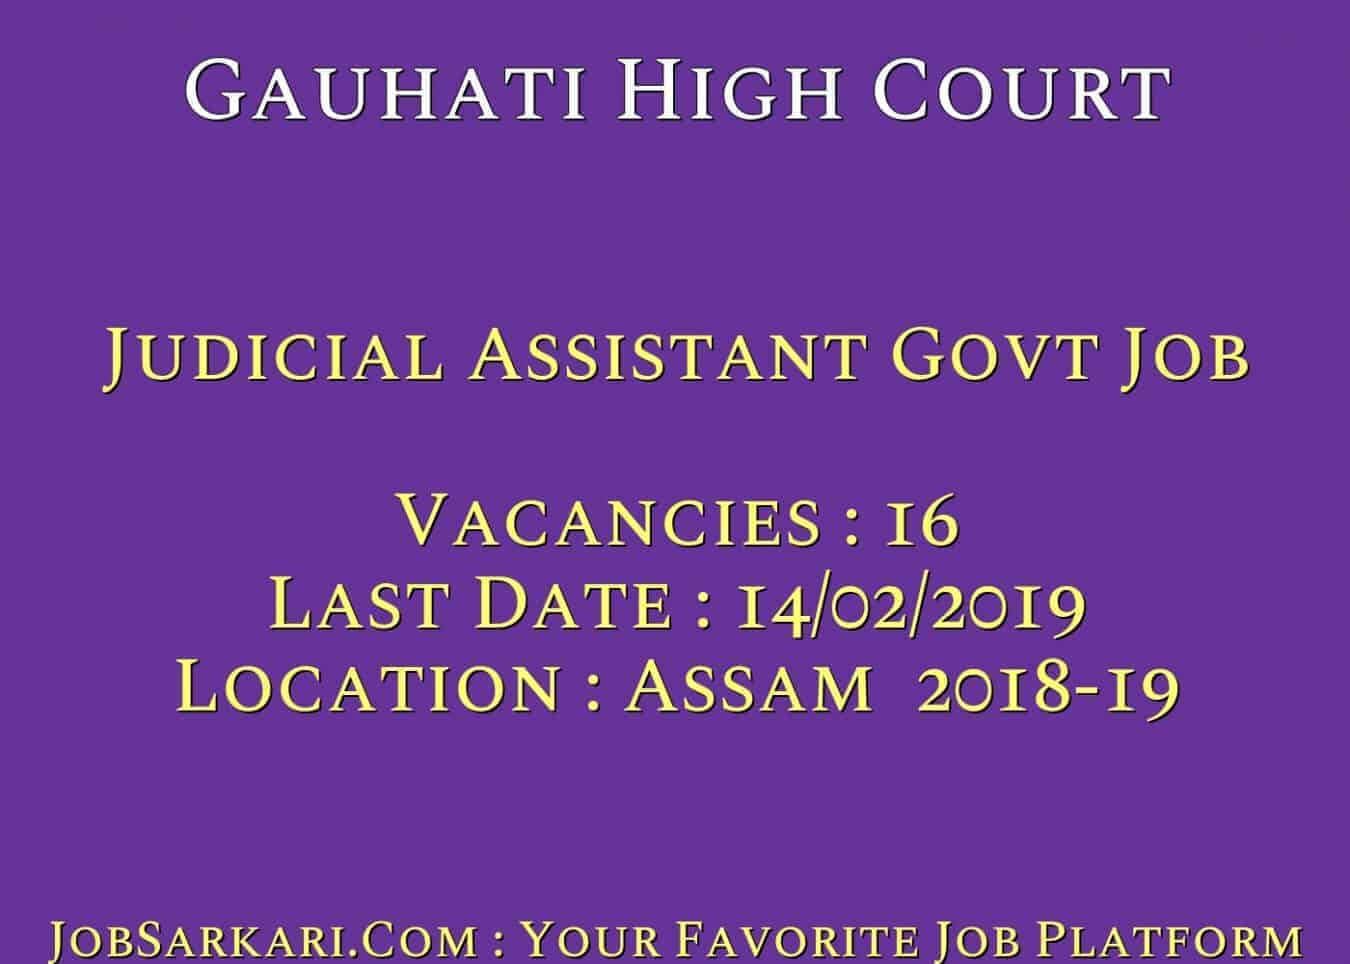 Gauhati High Court Recruitment 2018 for Judicial Assistant Govt Job